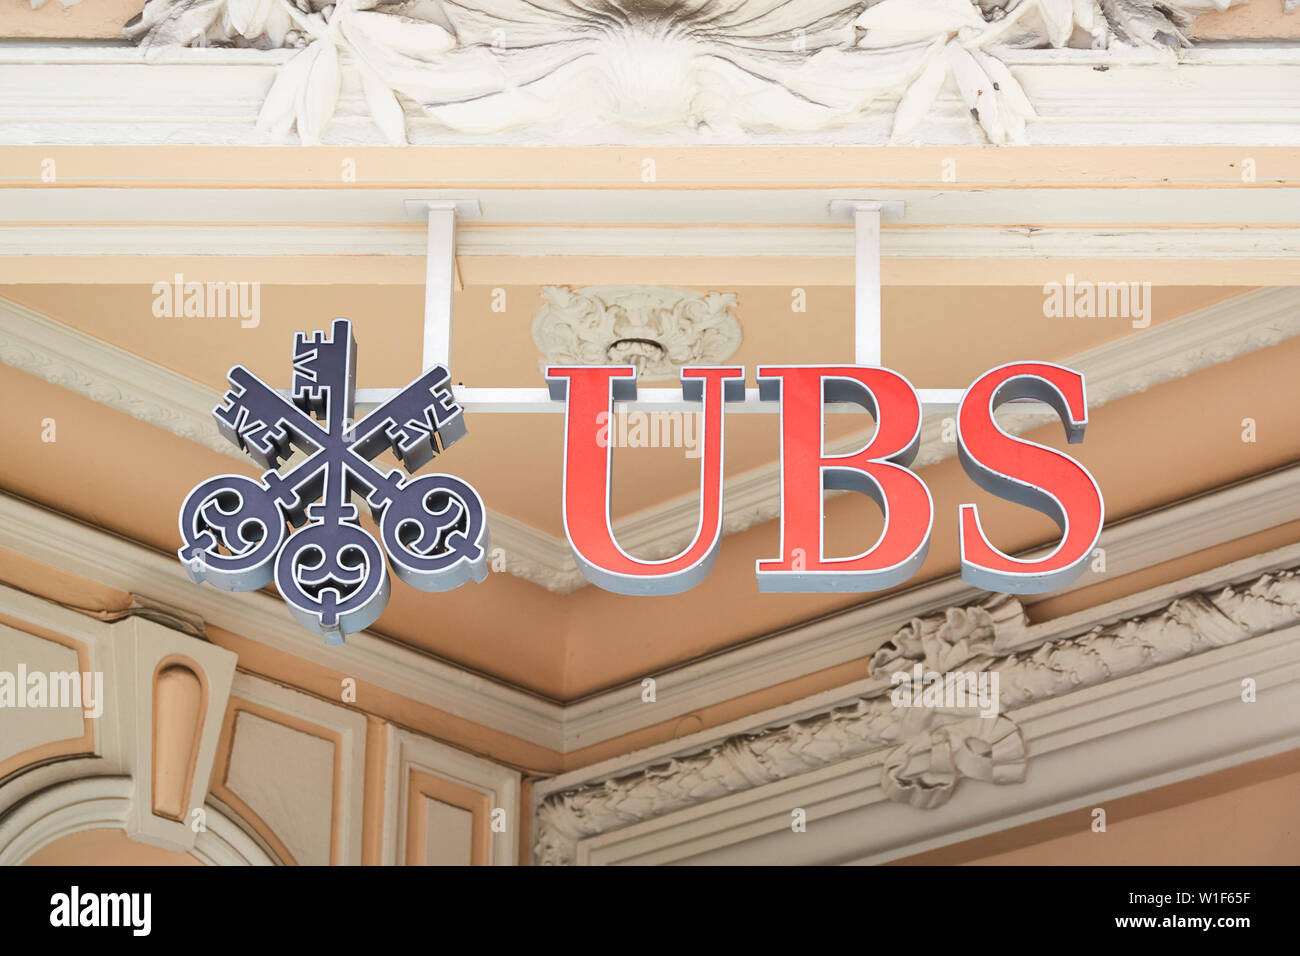 MONTE CARLO, MONACO - le 19 août 2016 : Banque UBS signe sur bâtiment ancien à Monte Carlo, Monaco. Banque D'Images